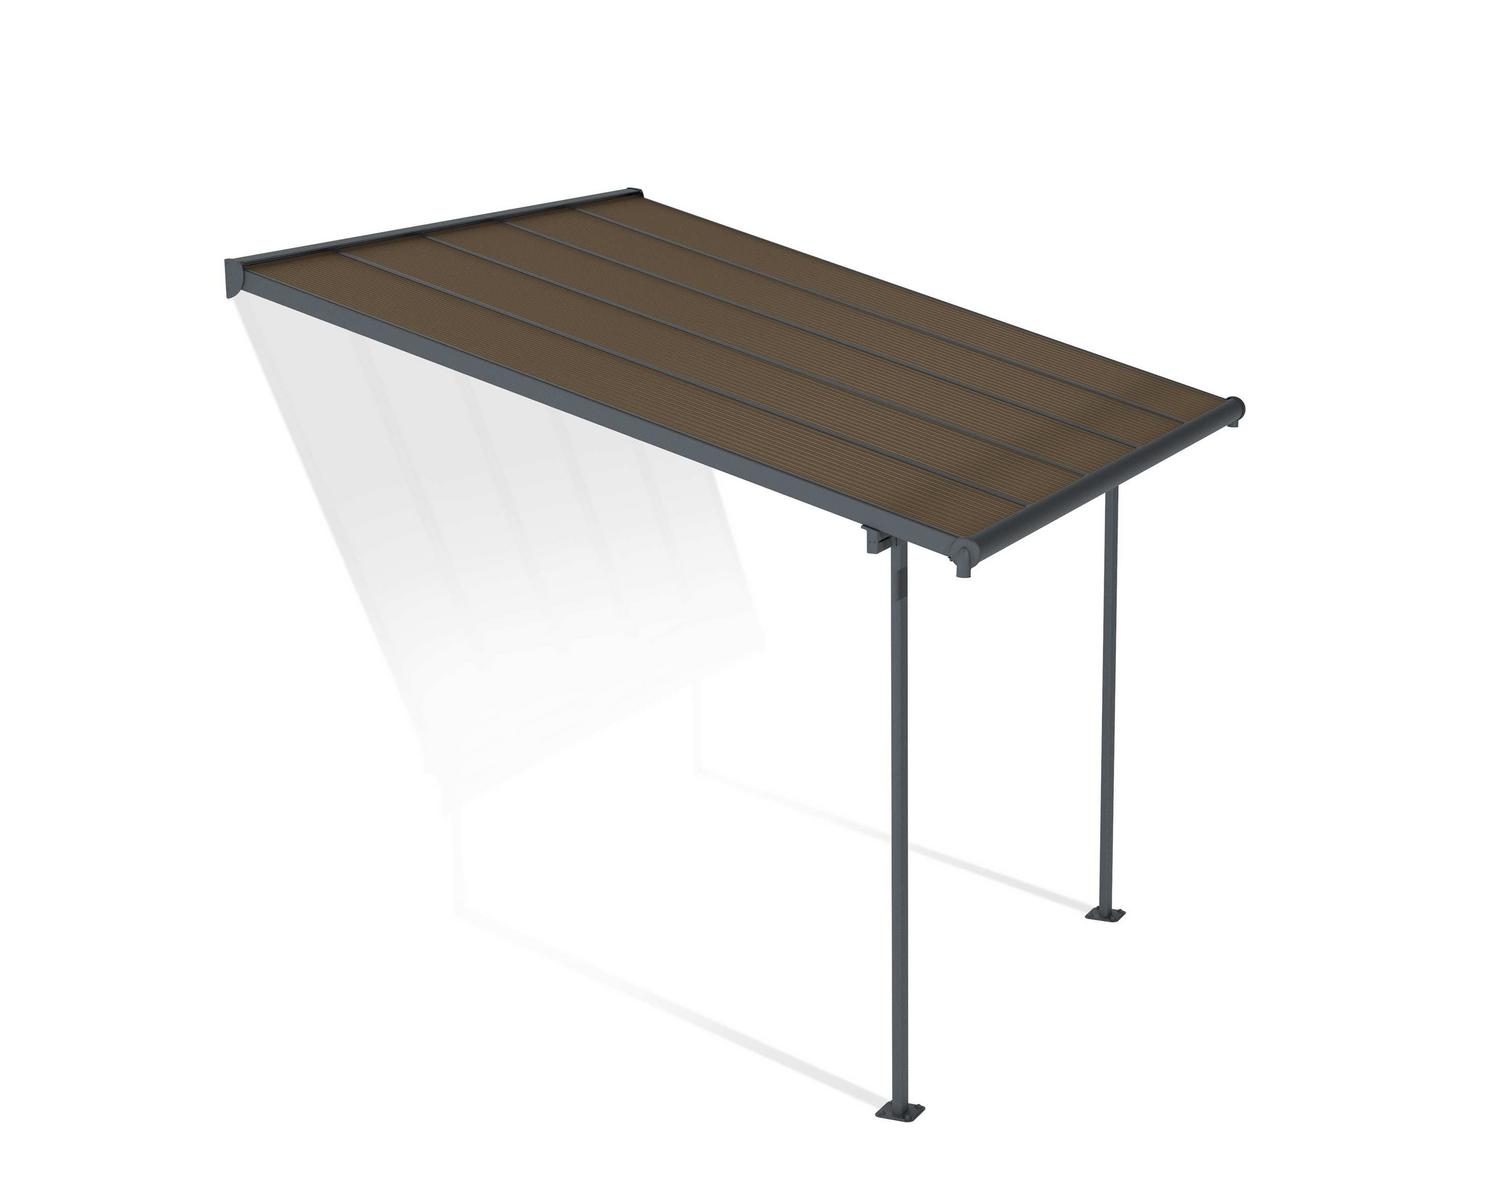 Capri 10 ft. x 10 ft. Patio Cover Kit, Grey Aluminium & Bronze-tinted twin-wall polycarbonate roof panels.